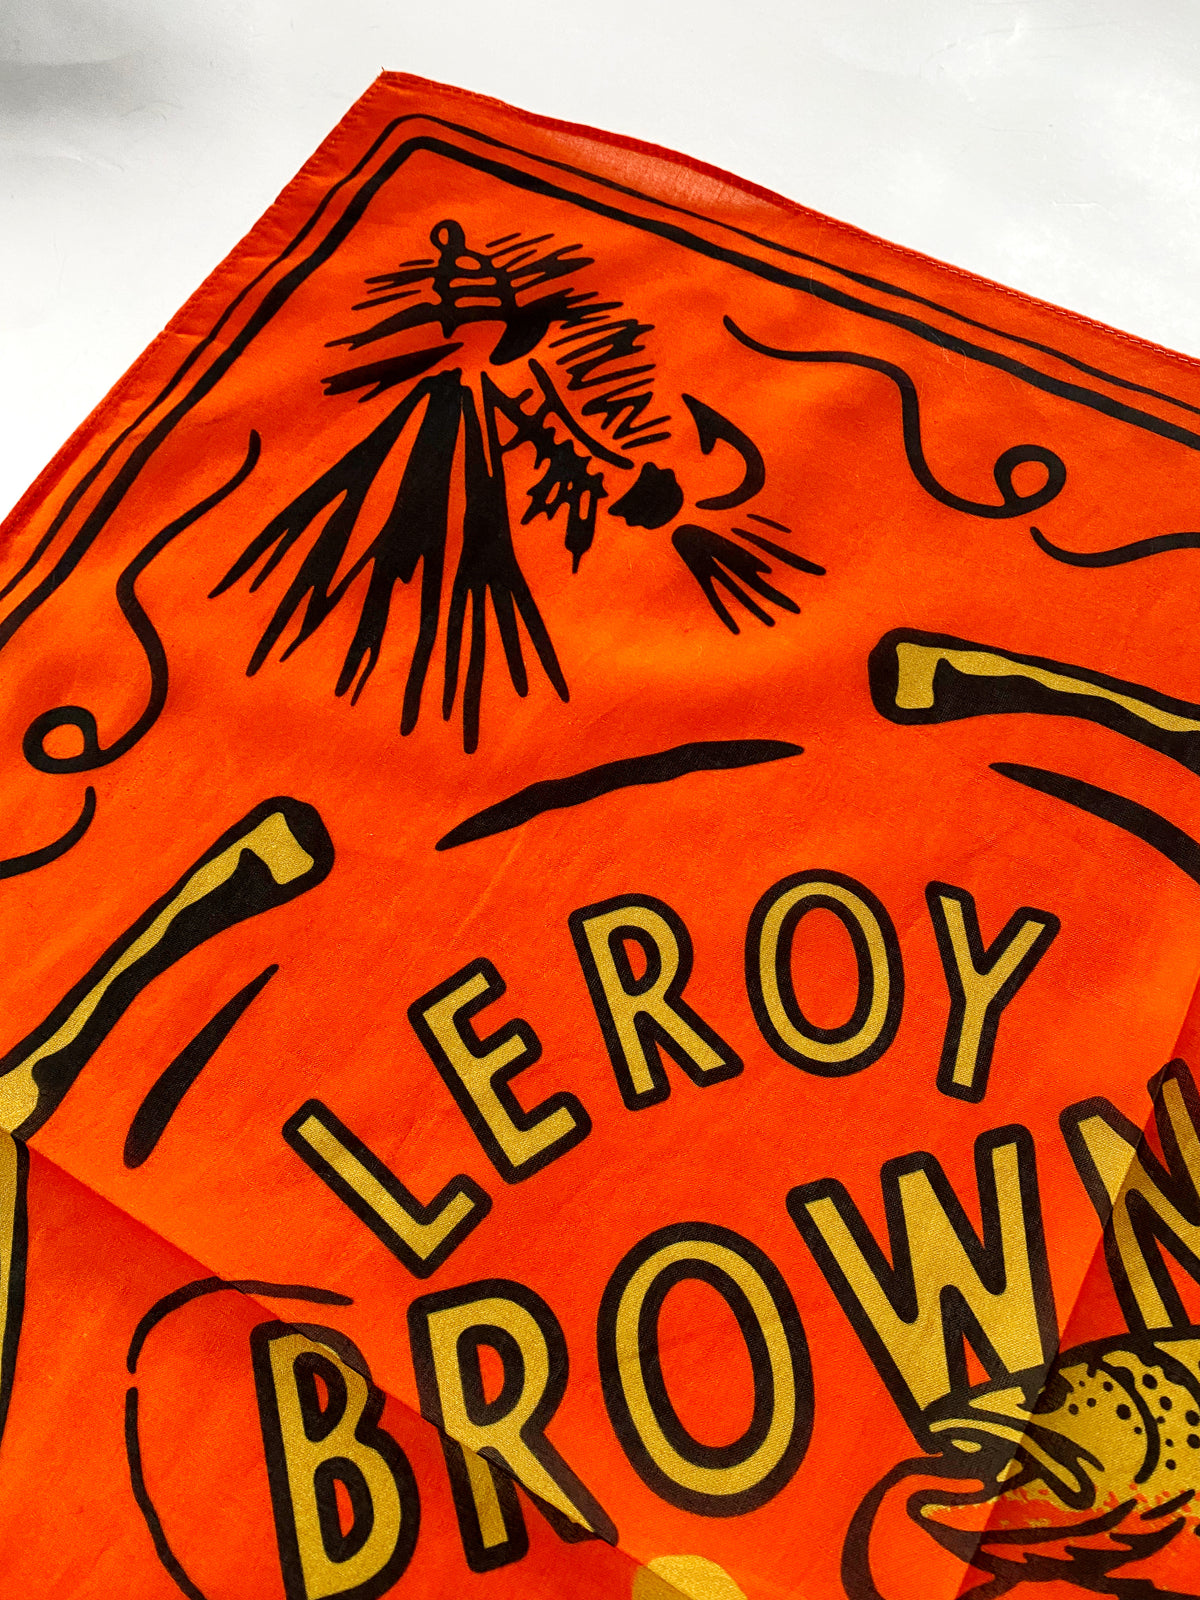 Leroy Brown Bandana